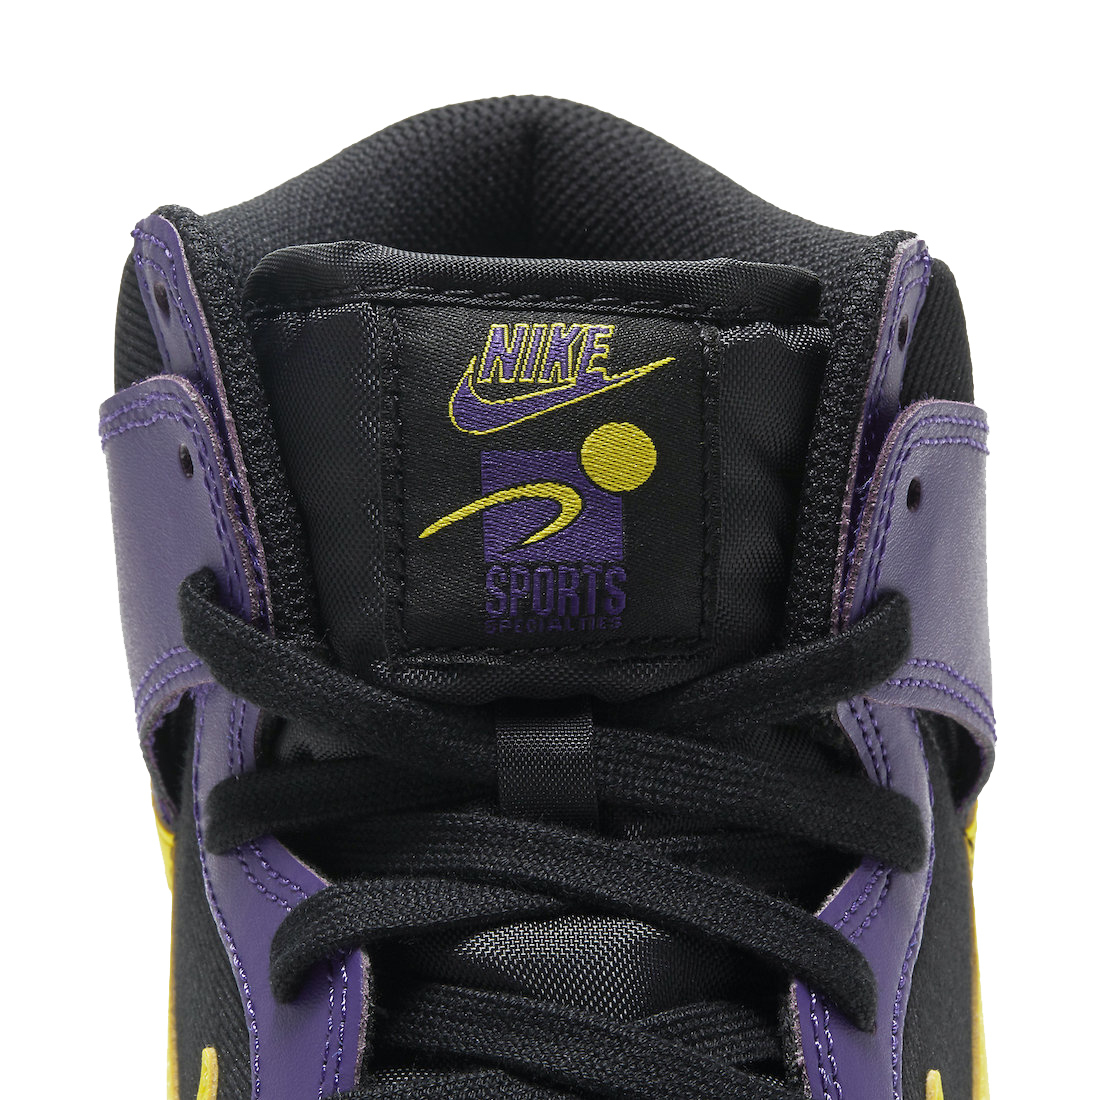 Do You Like the Nike Dunk High EMB Lakers?